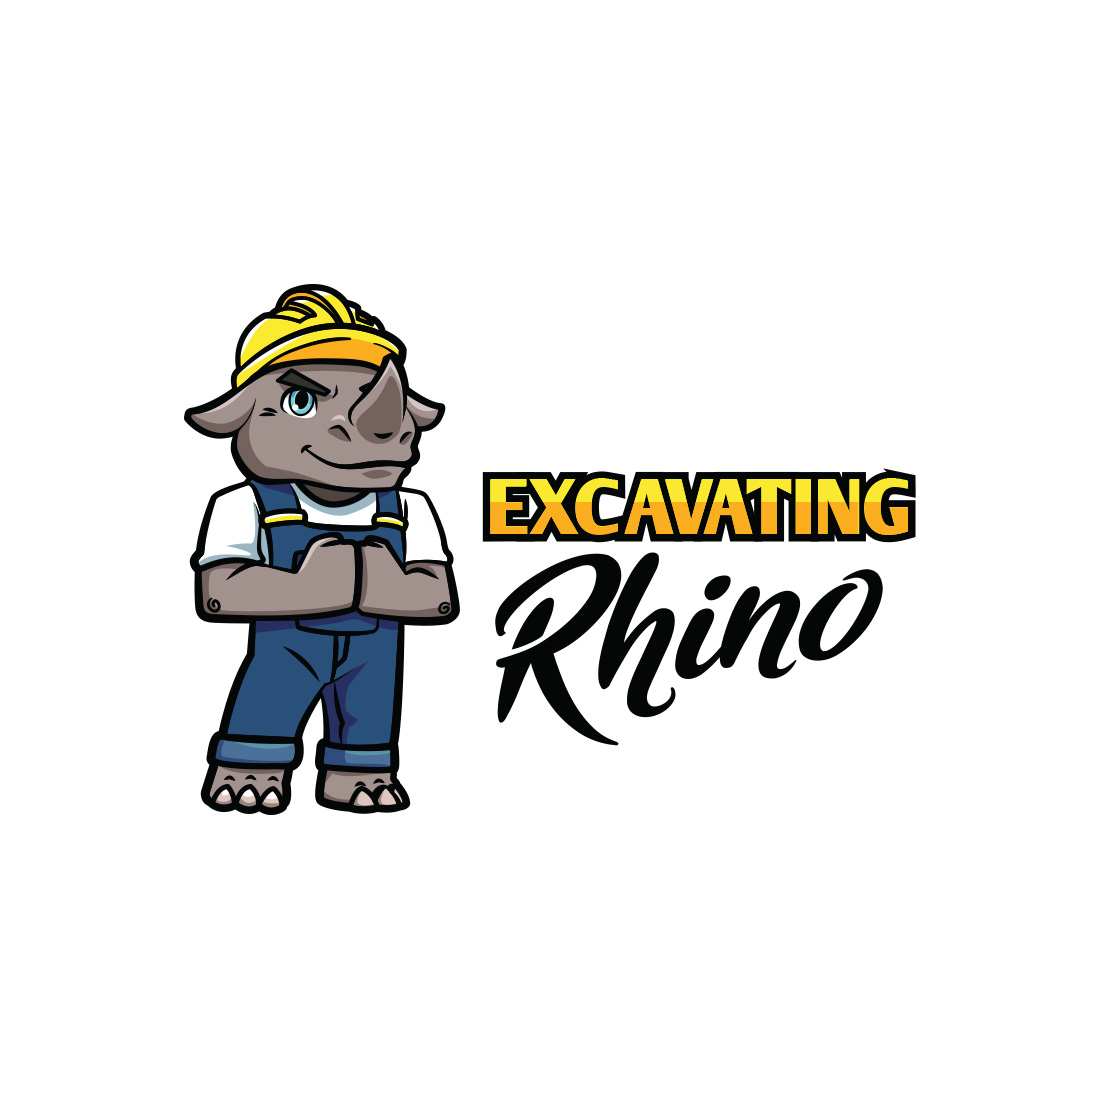 Excavating Rhino cover image.